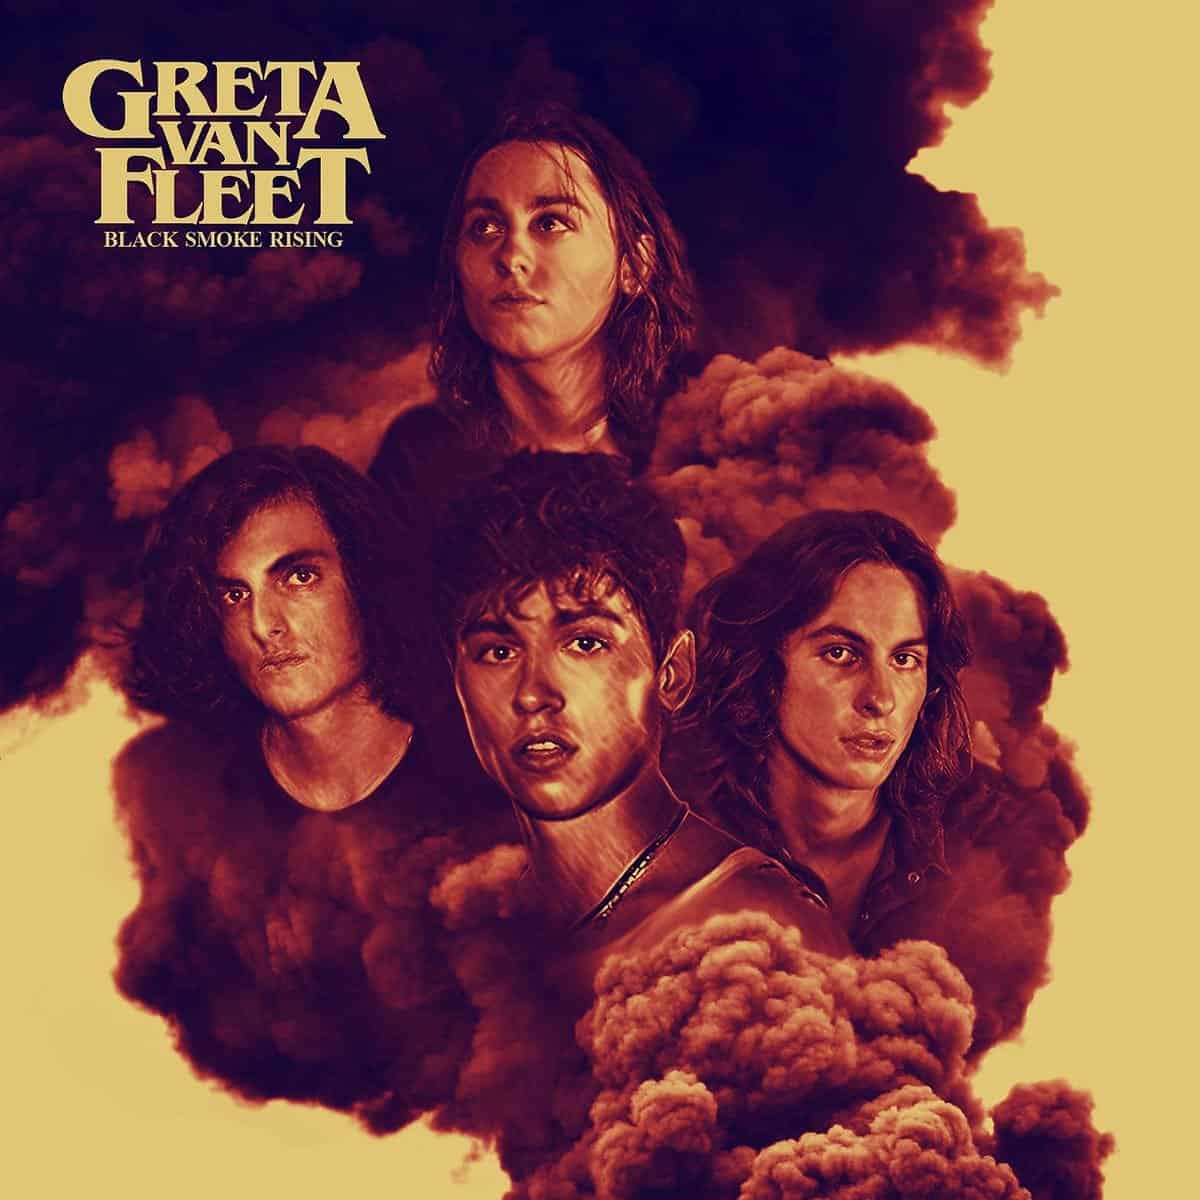 Greta-Van-Fleet-Black-Smoke-Rising-Vinyl-Record-Album-front